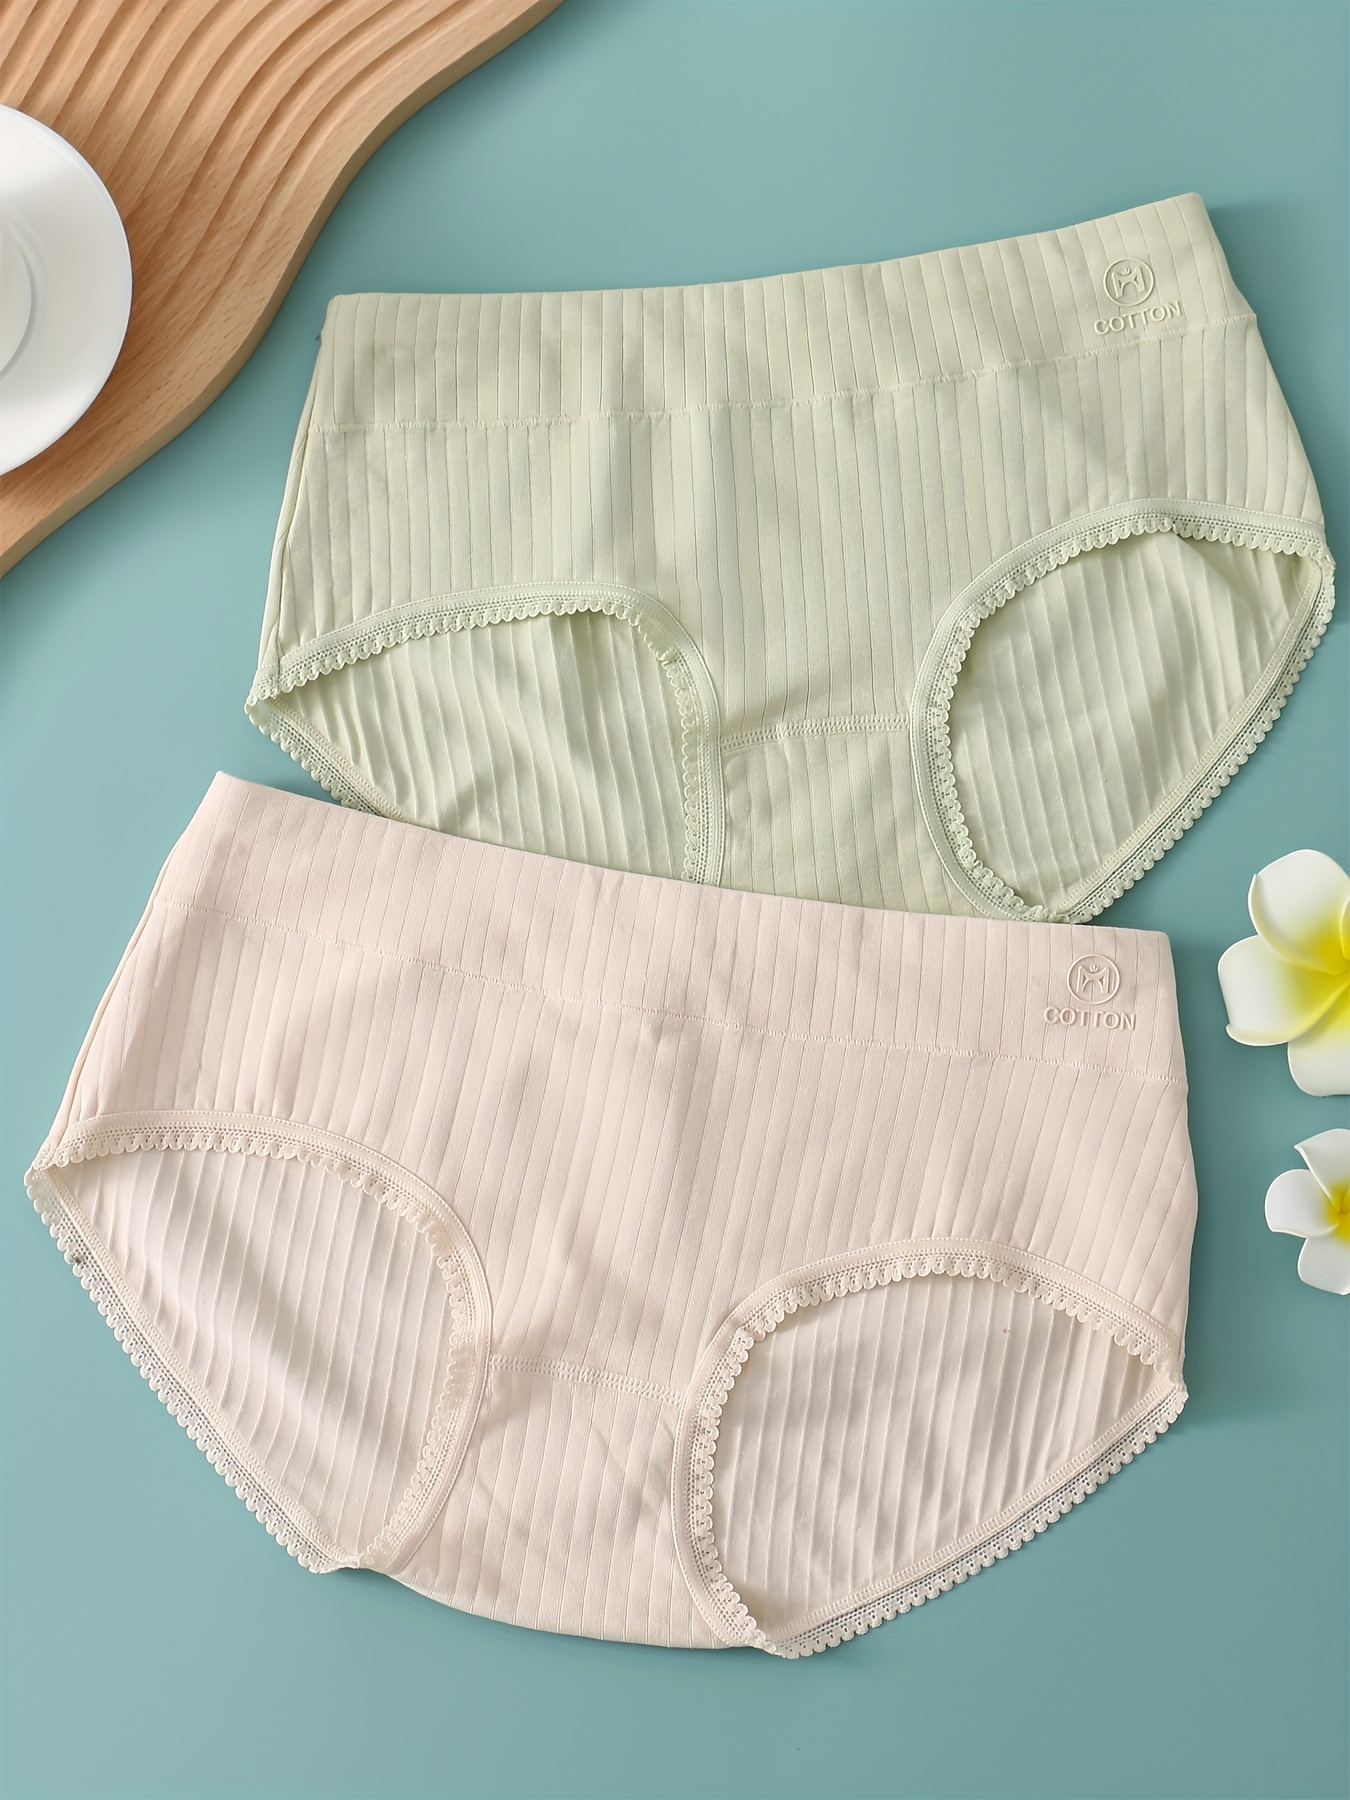 Girls Underwear Comfortable Panties for Teens Girls Briefs